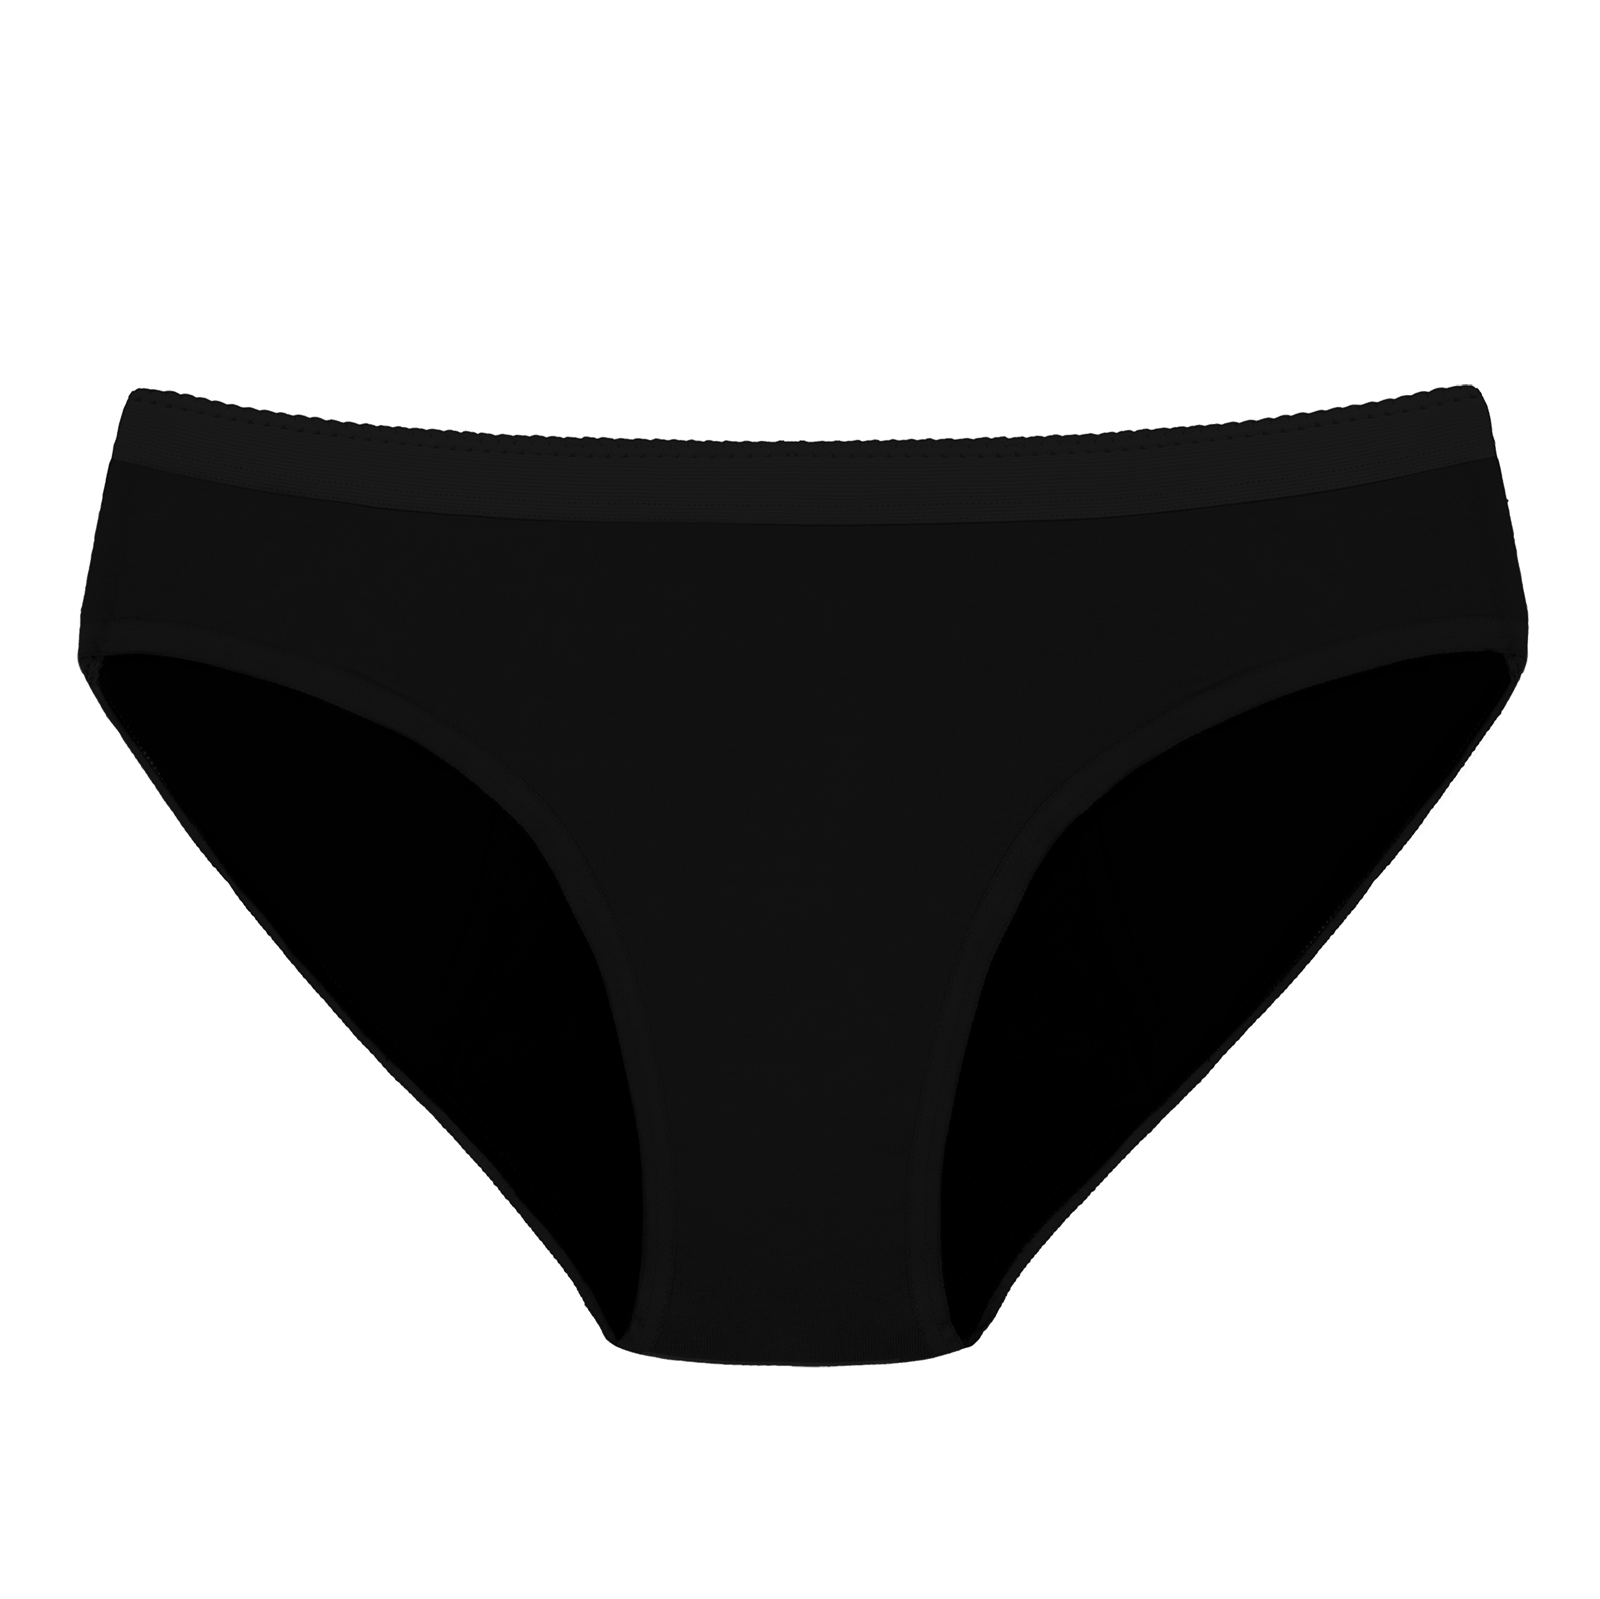 teens super bikini teen period underwear - black in sizes 9-16 tween leakproof undies